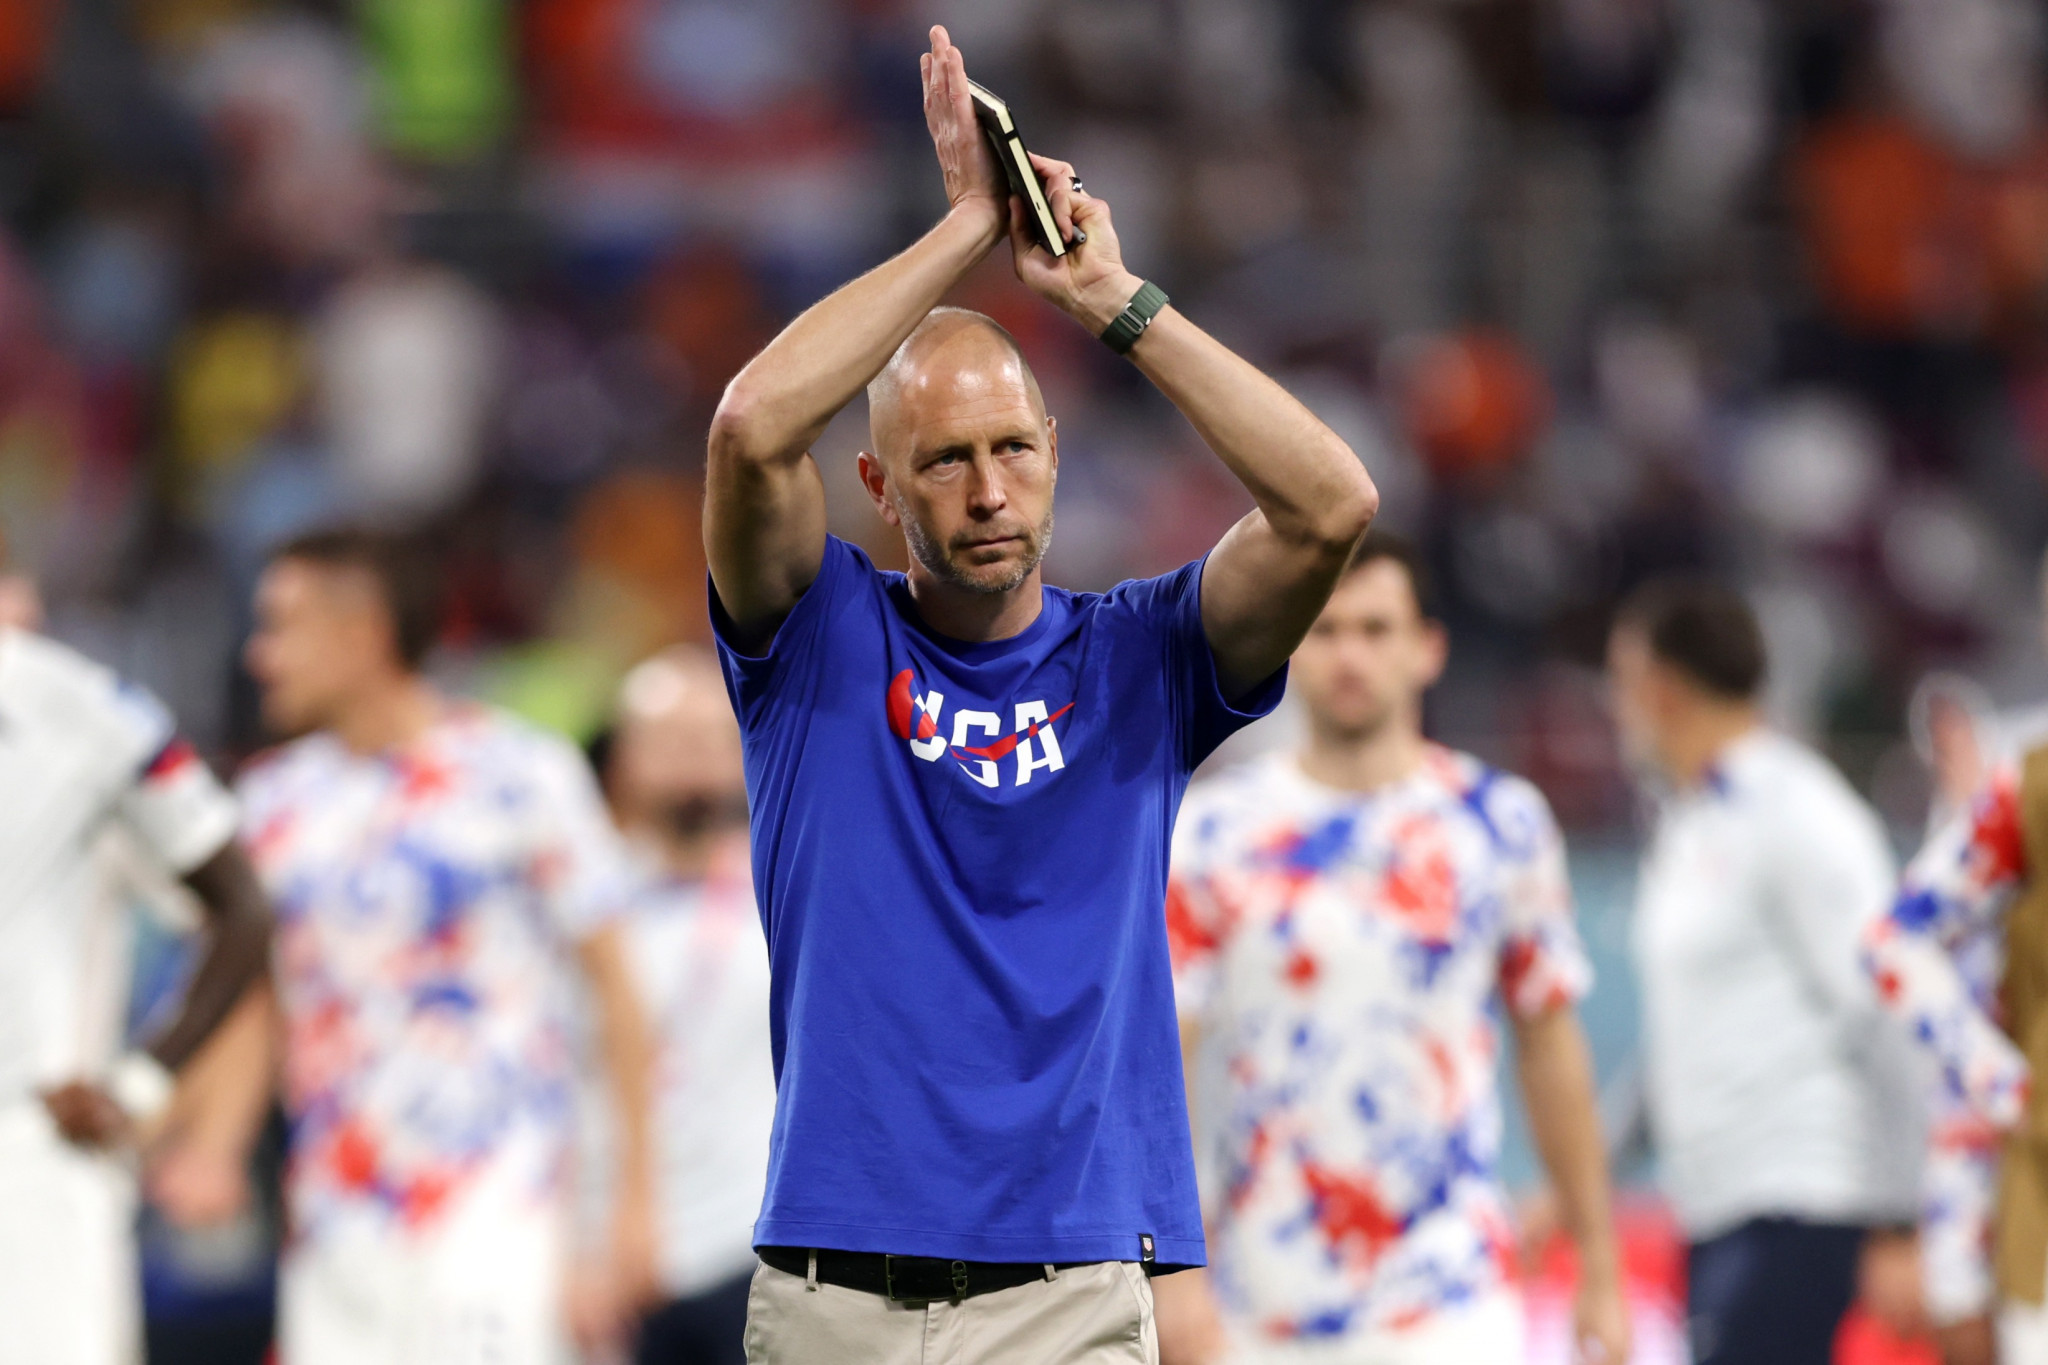 Berhalter hopes to remain head coach despite US Soccer investigation